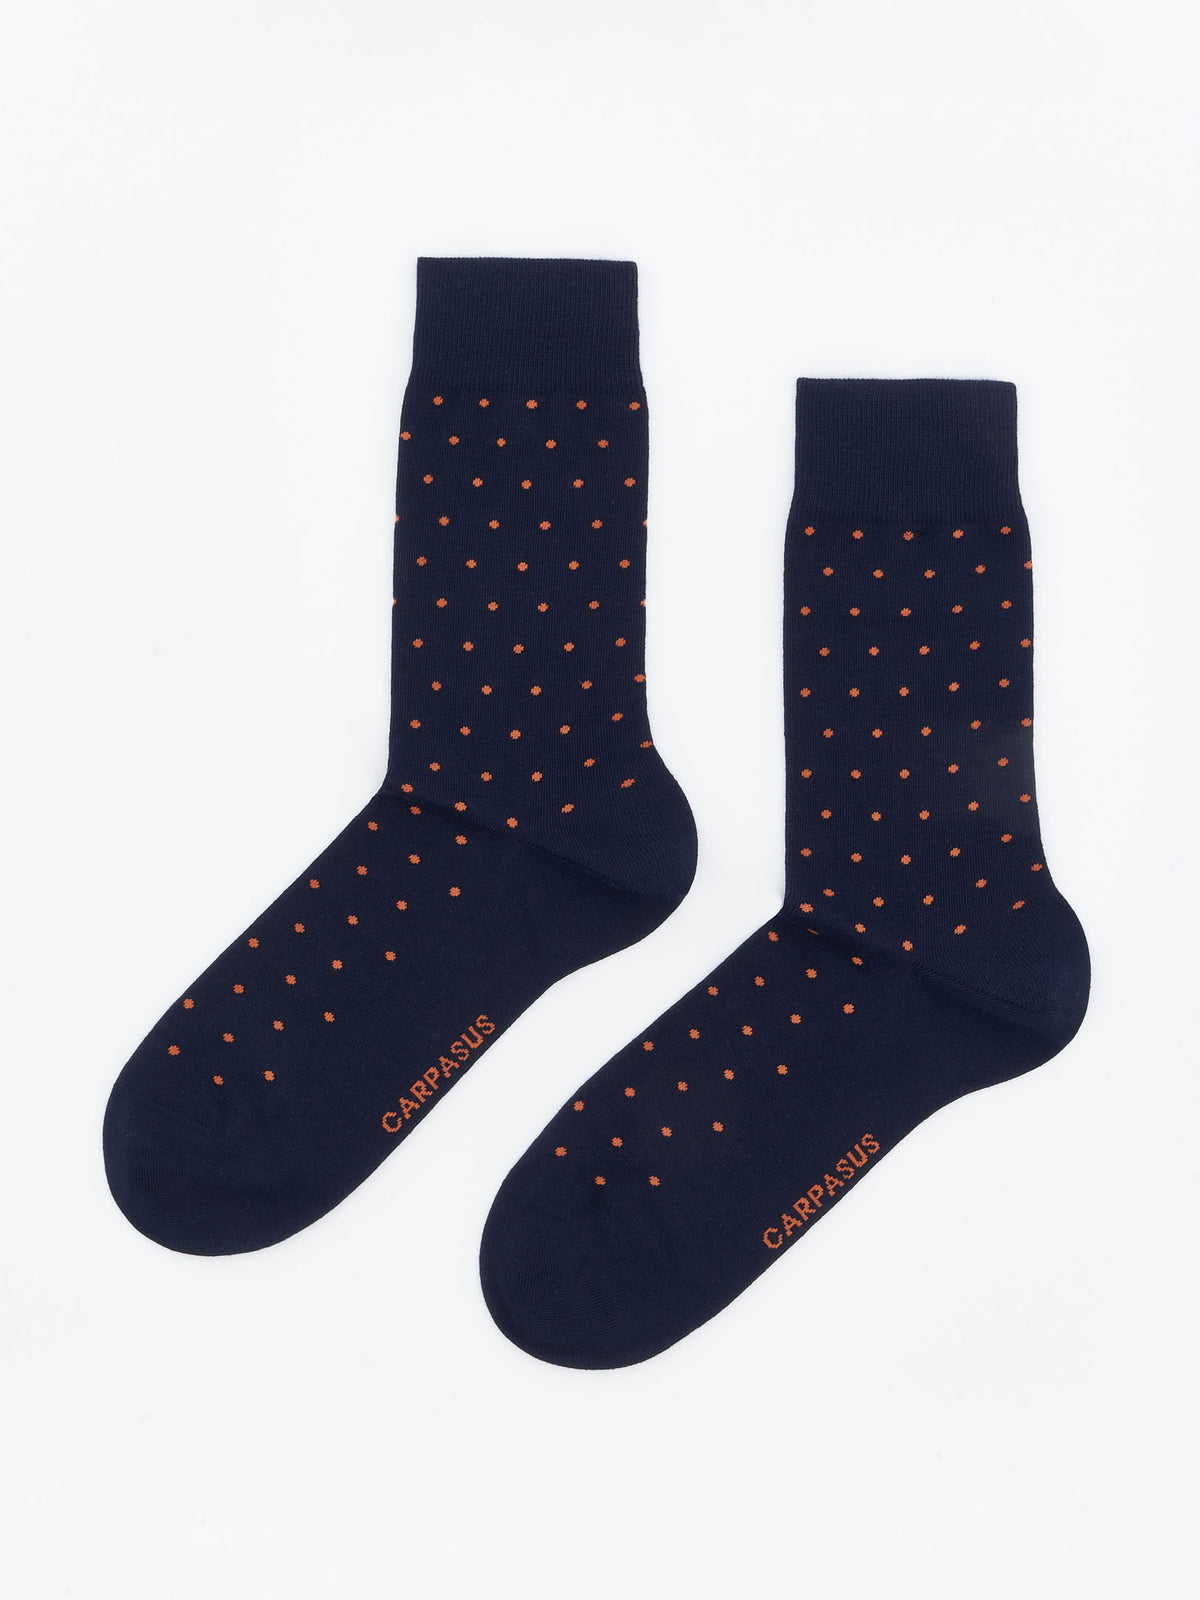 Classy Socks Dots Navy/Orange